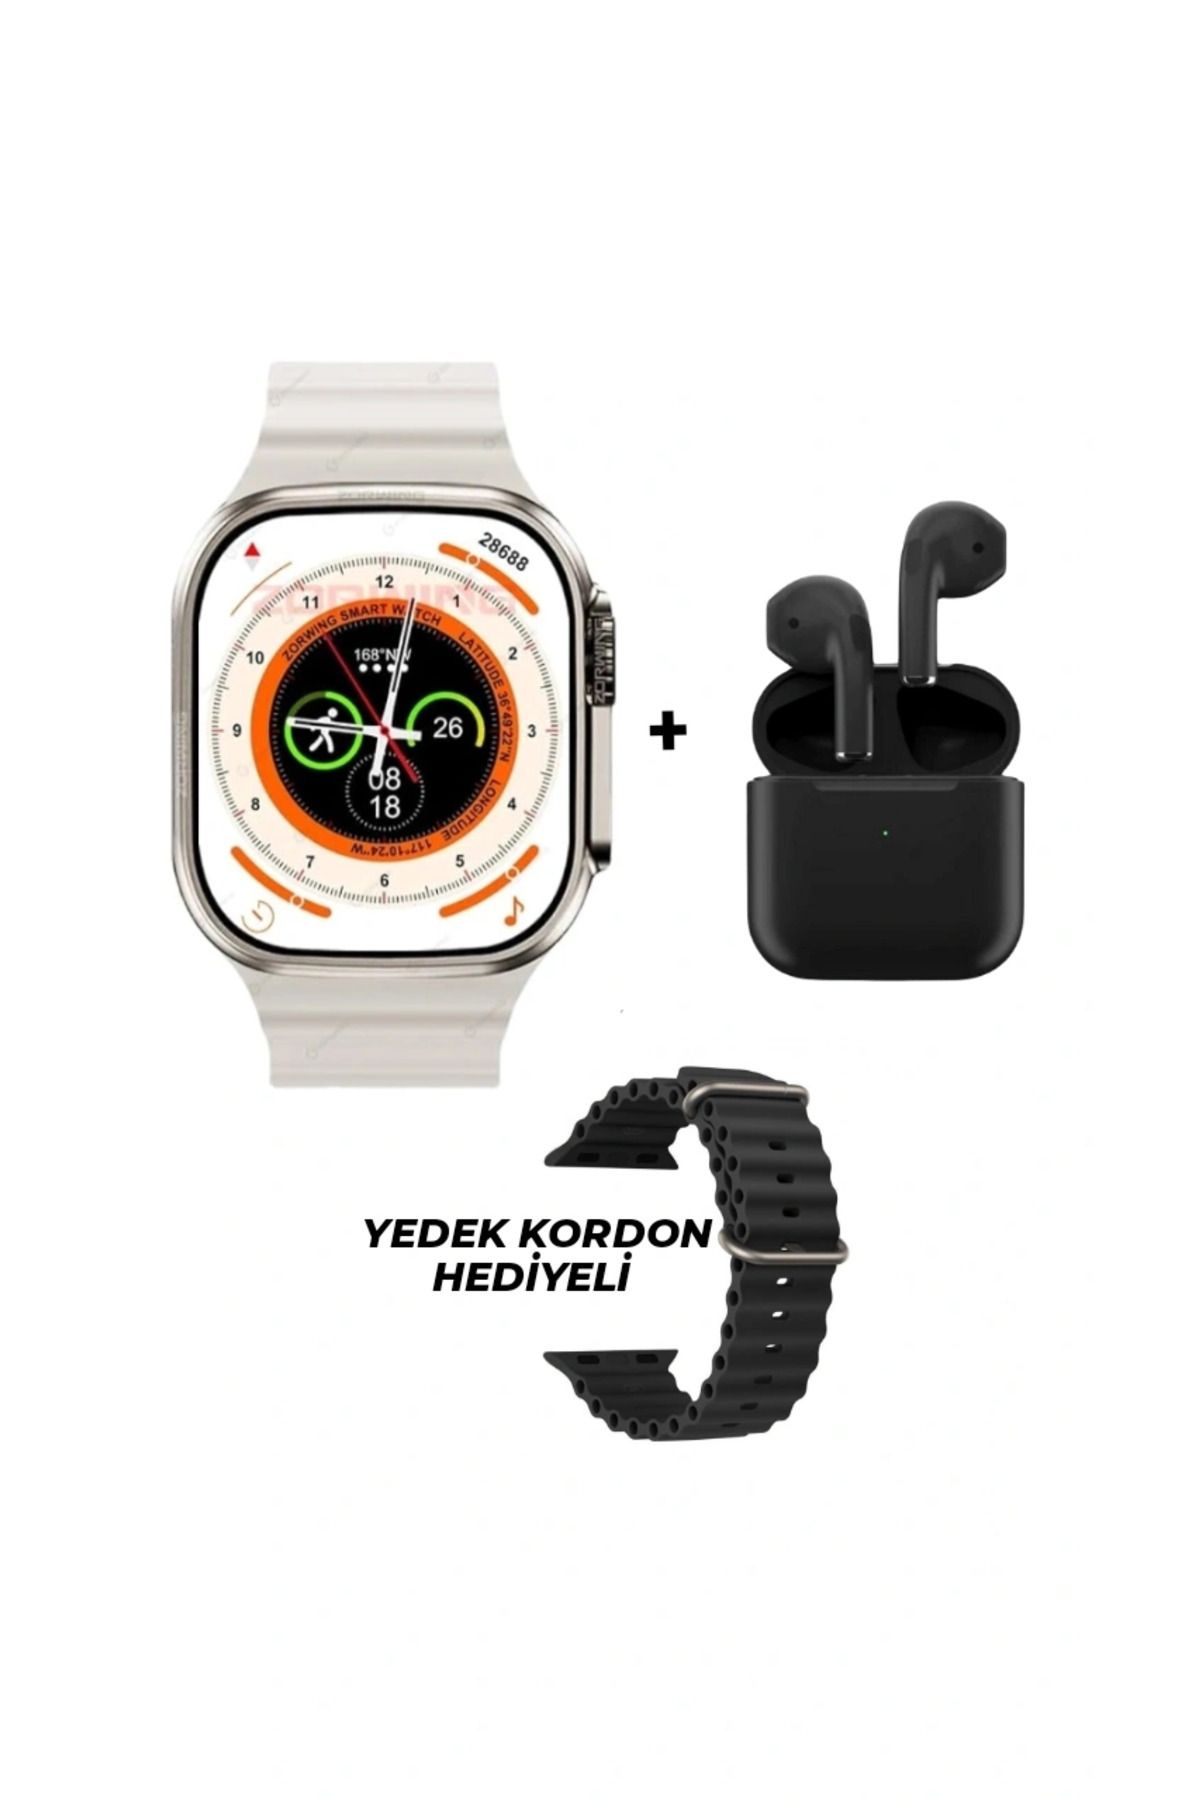 ADEO TEKNOLOJİ 8 Ultra Watch (Aklı Saat + Bluetooth kulaklık)T800 Android ios 1.99 Inç Gri Kasa Yedek Kordon Hediye